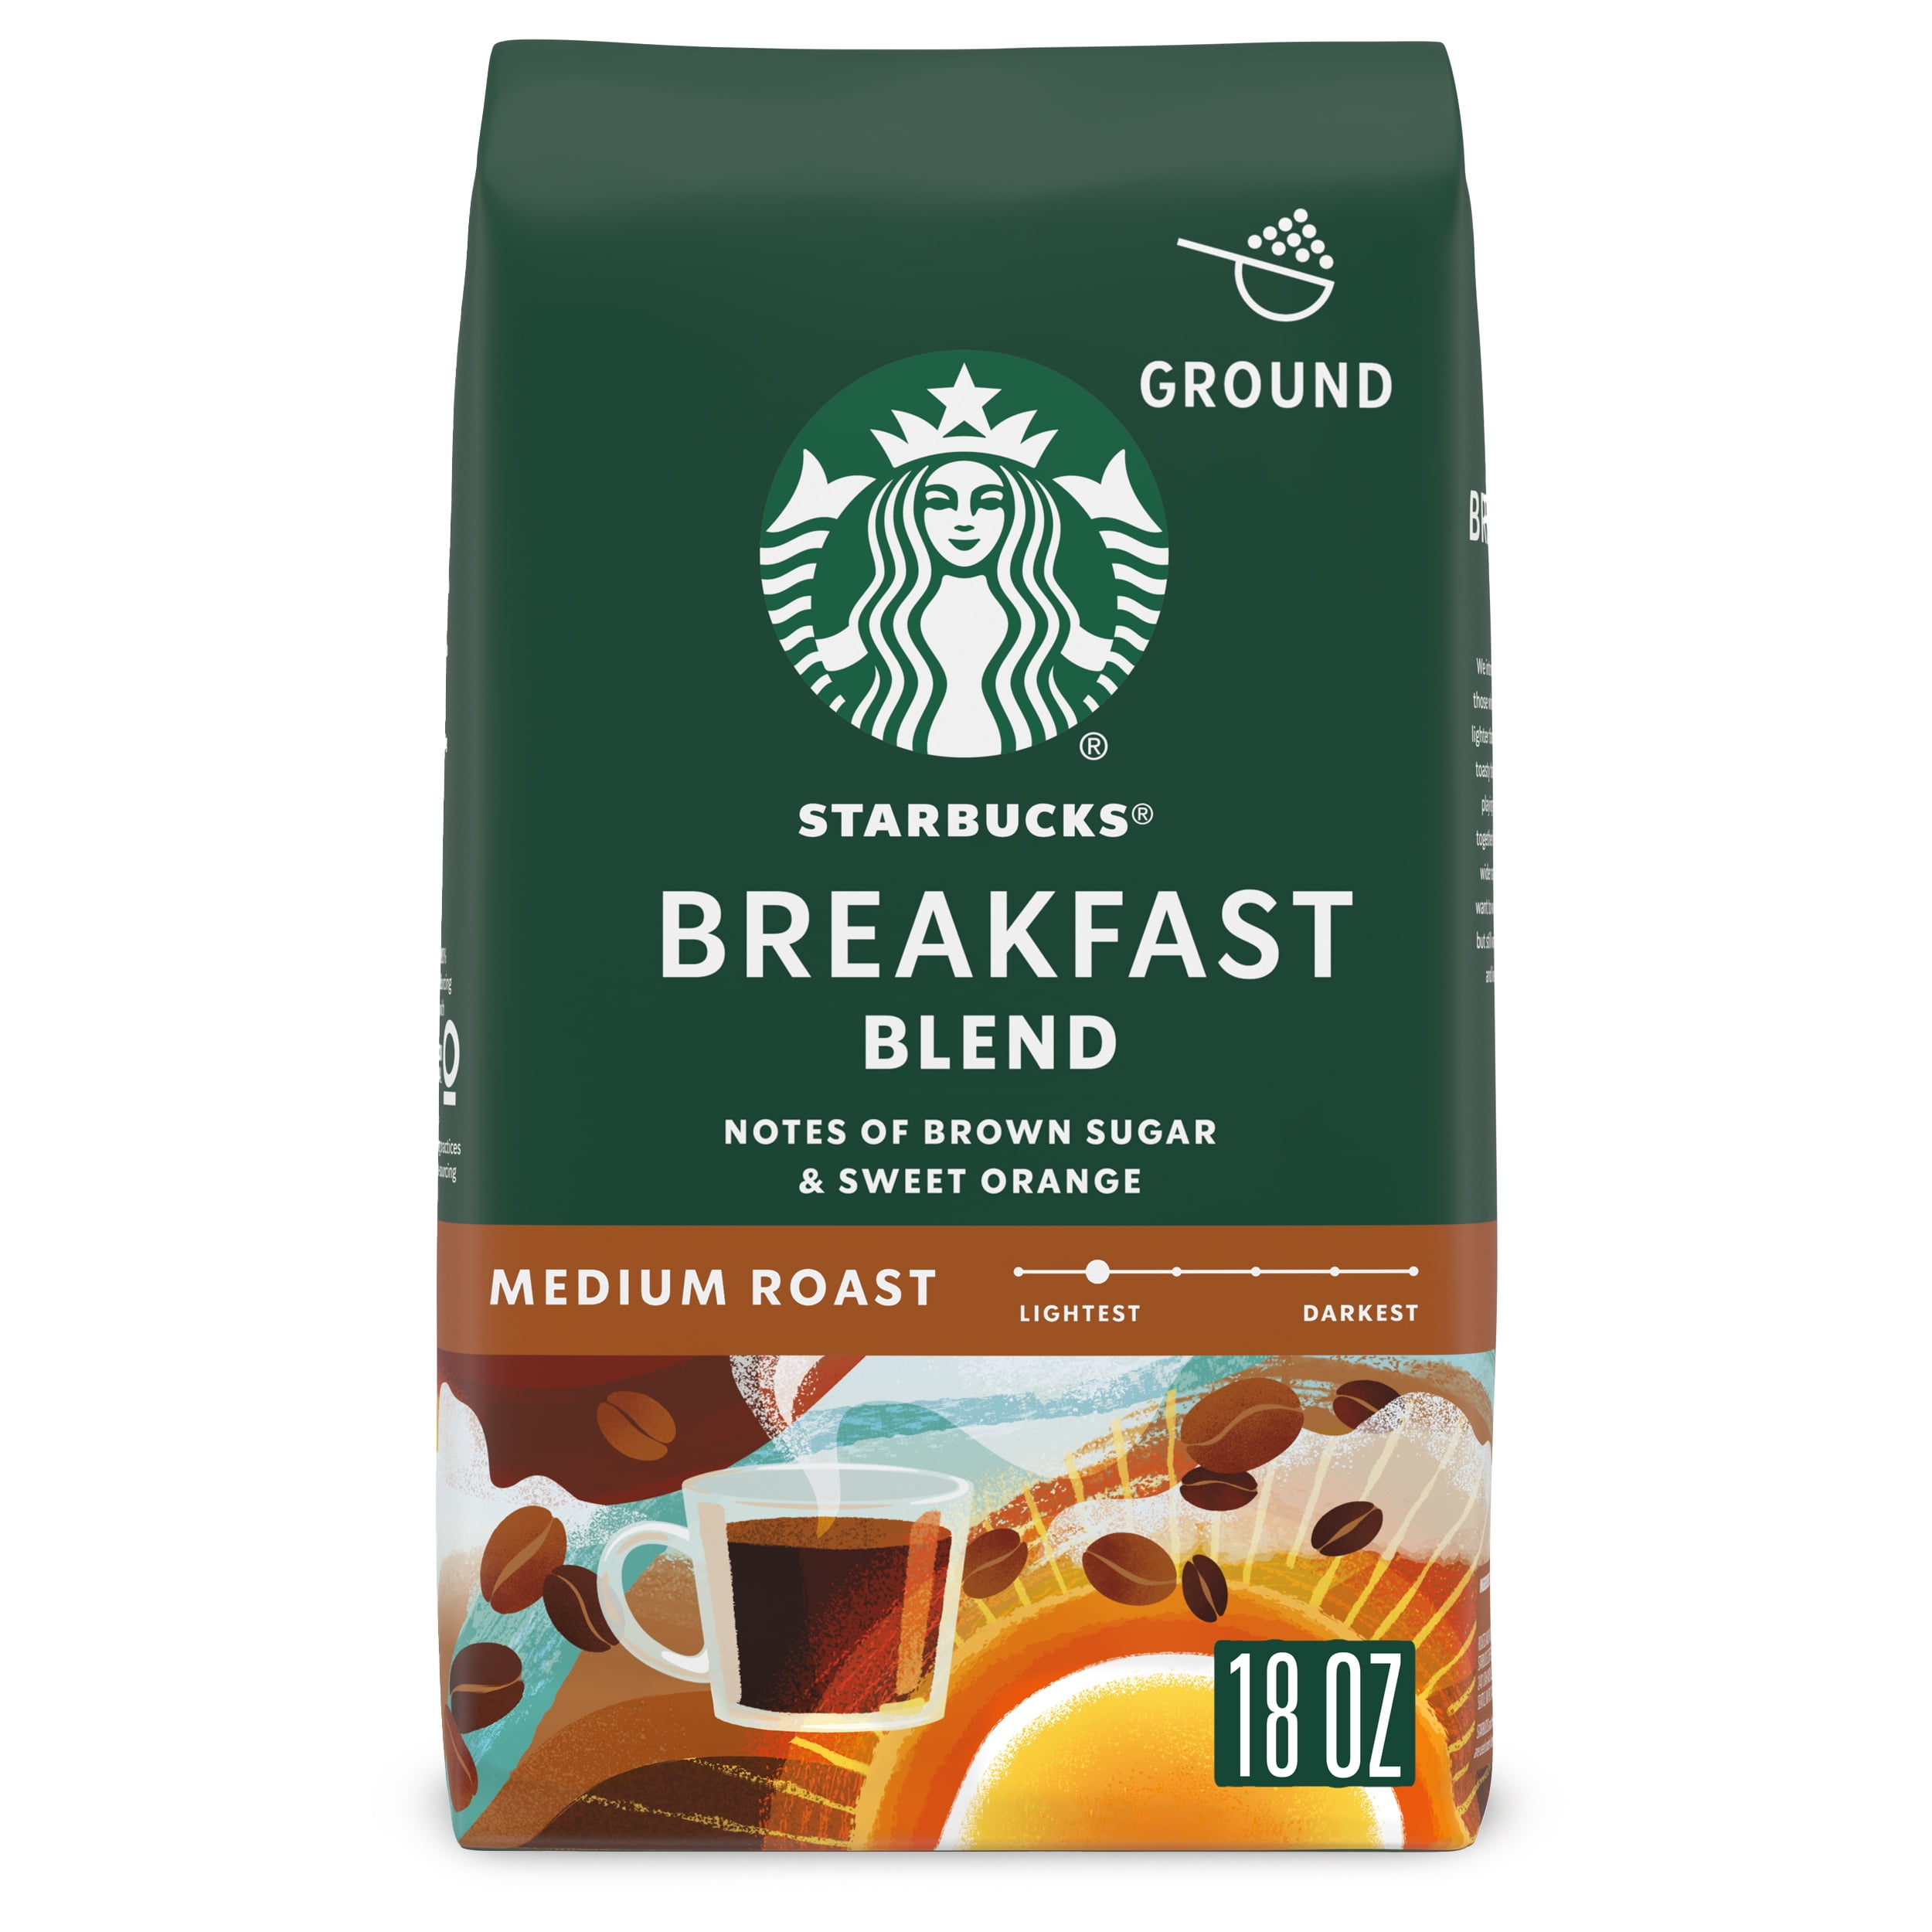 Starbucks Breakfast Blend, Ground Coffee, Medium Roast, 18 oz